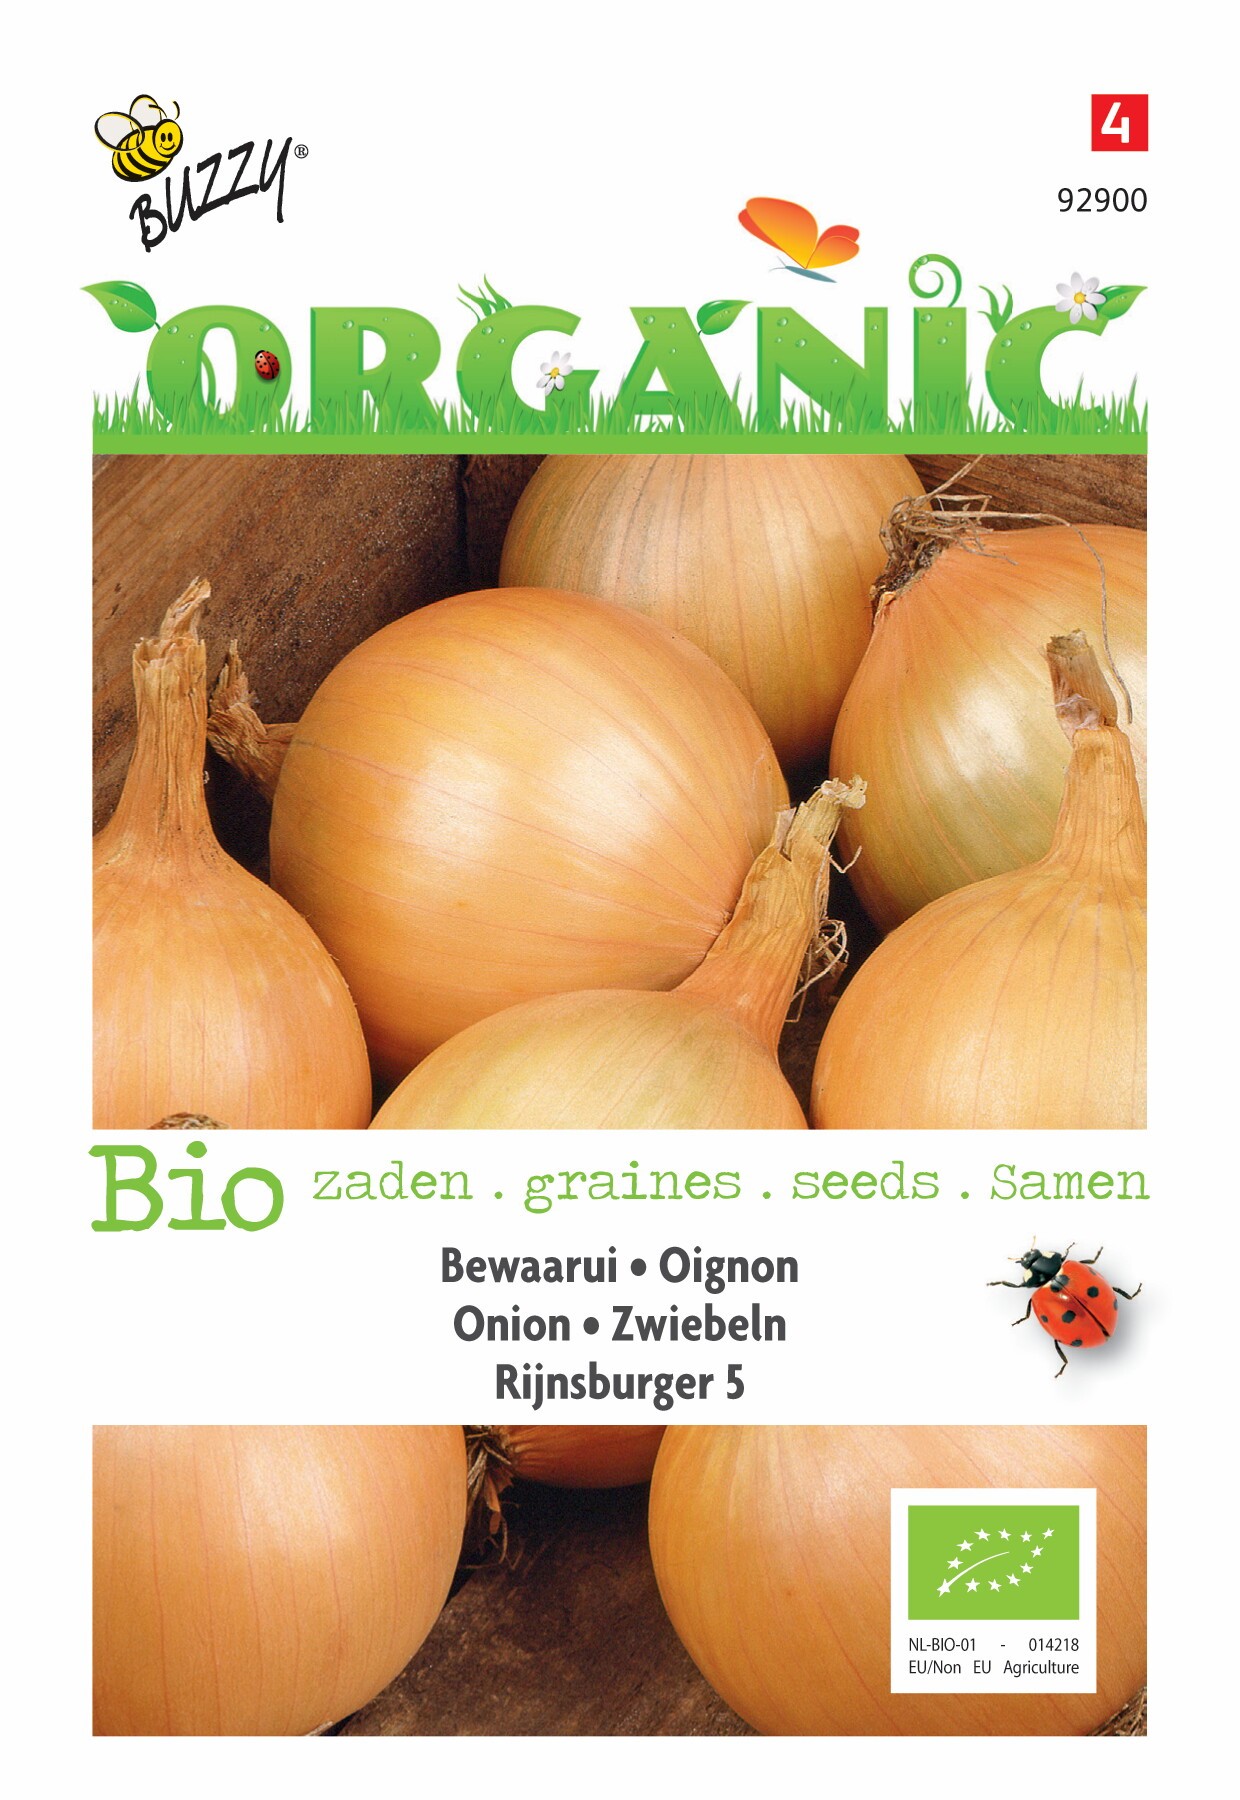 https://www.warentuin.nl/media/catalog/product/1/7/1778711117929000_buzzy_bio_organic_tuinzaden_buzzy_organic_ui_rijnsburger_5_bew_c7a7.jpeg